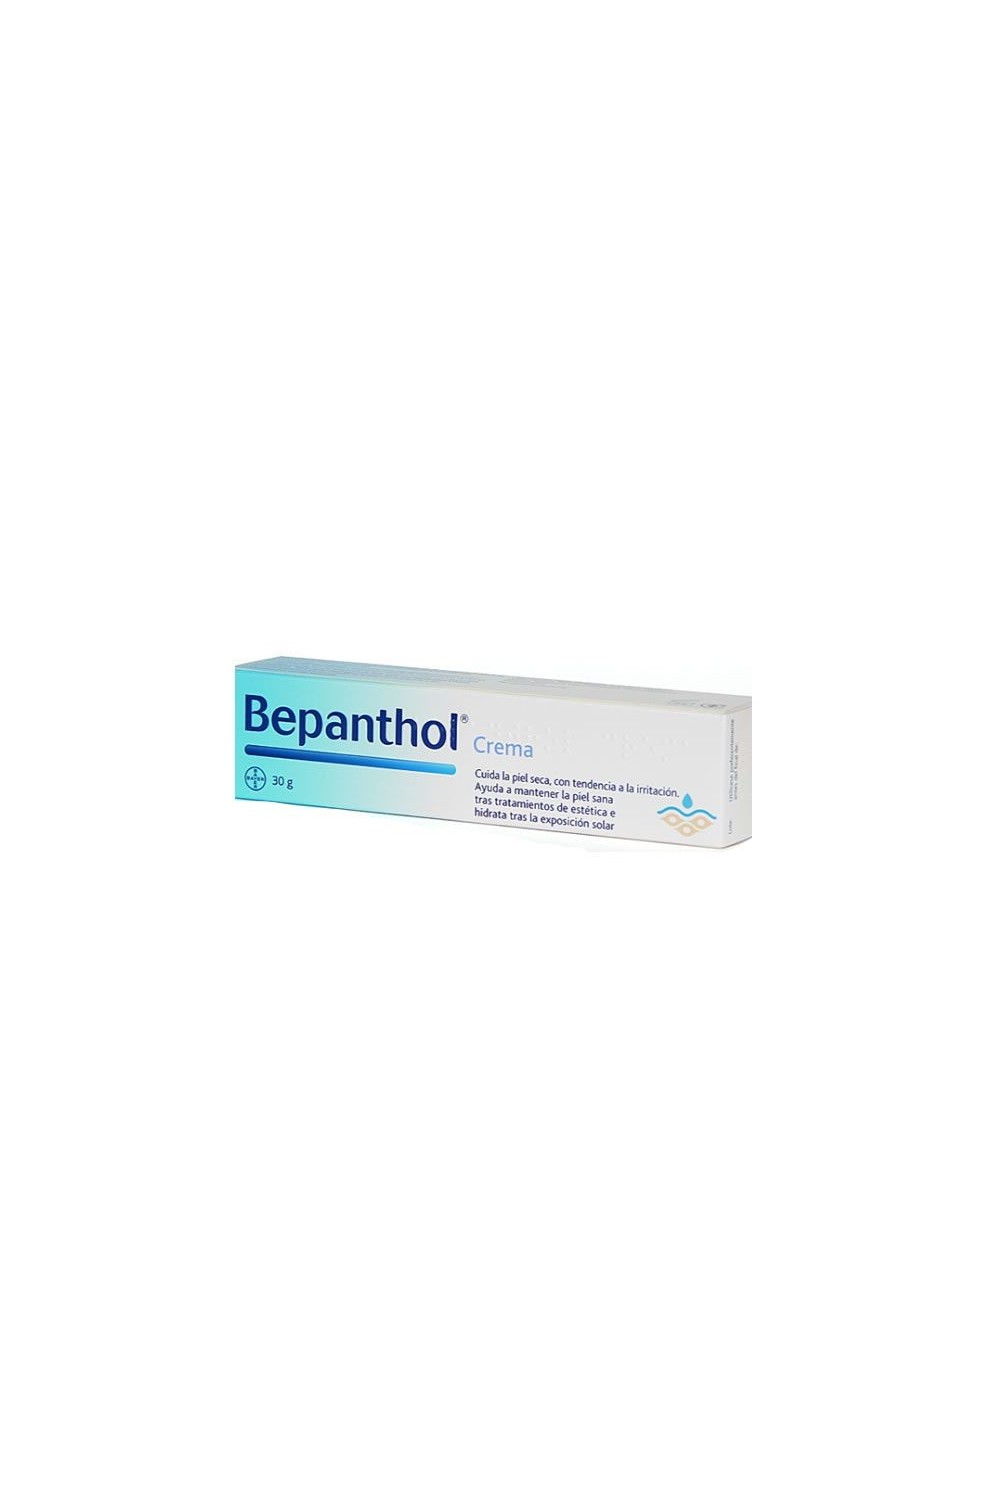 Bepanthol Cream 30g